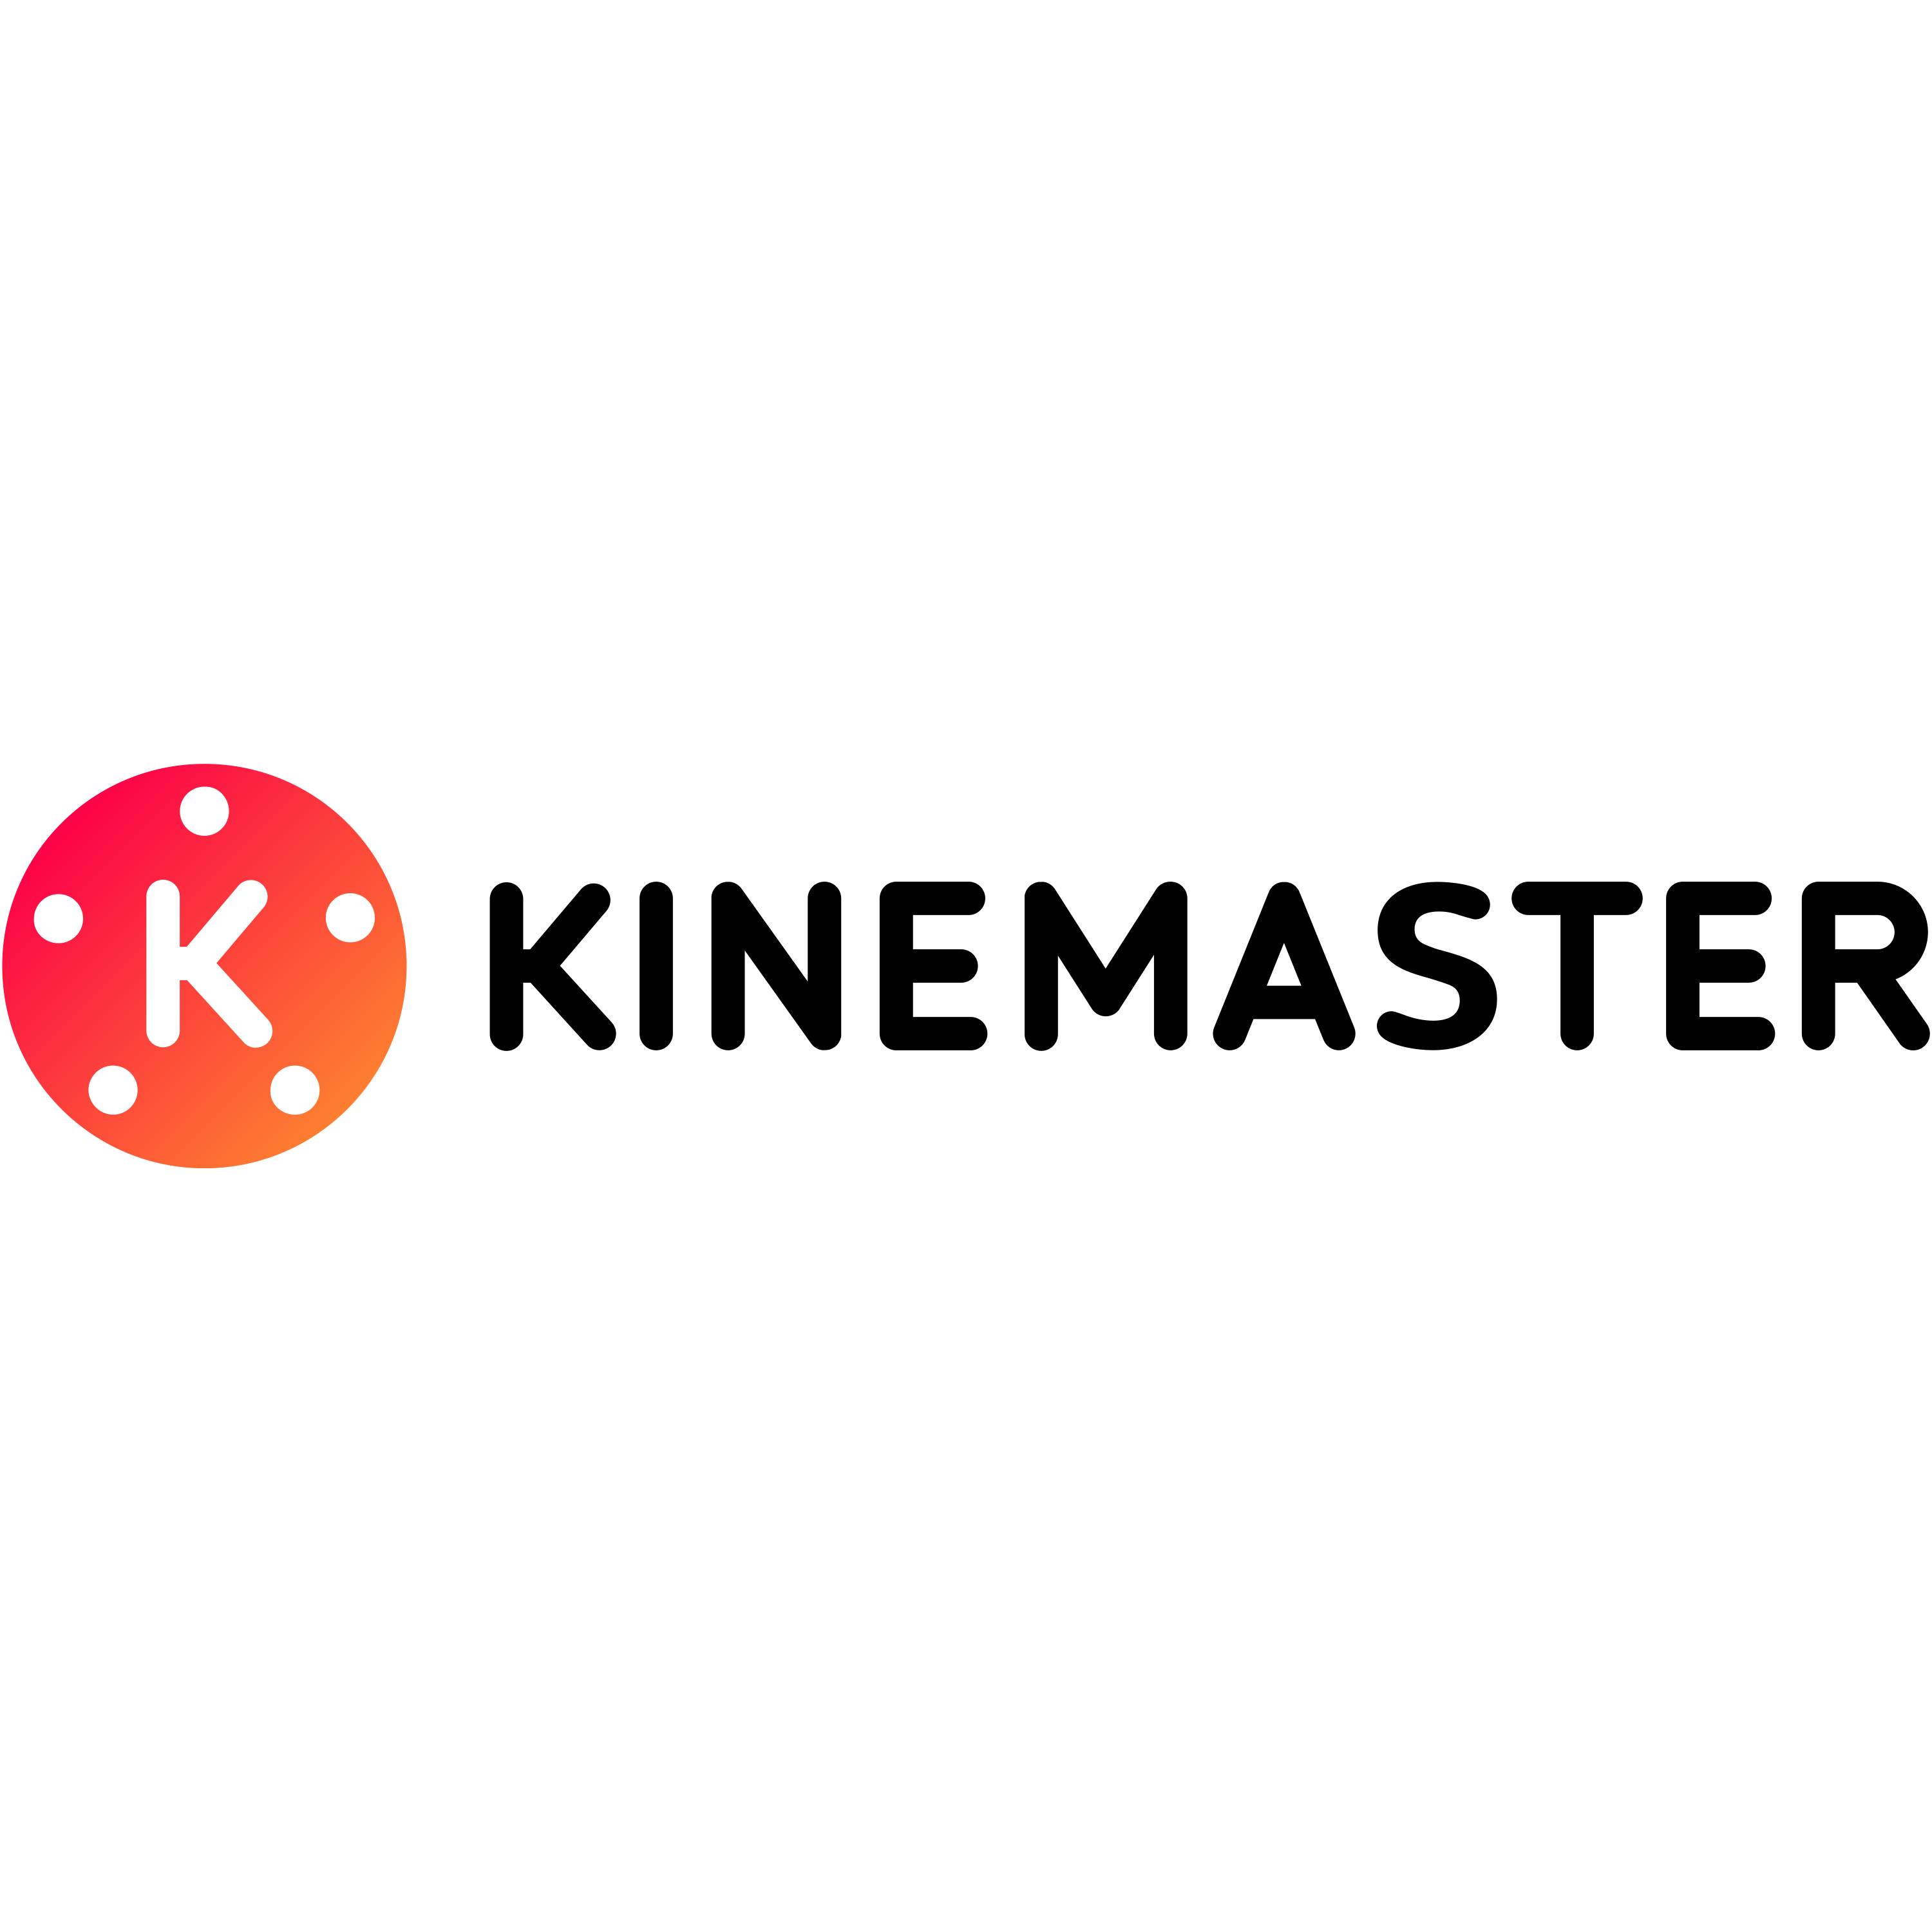 Kinemaster Logo  Transparent Image